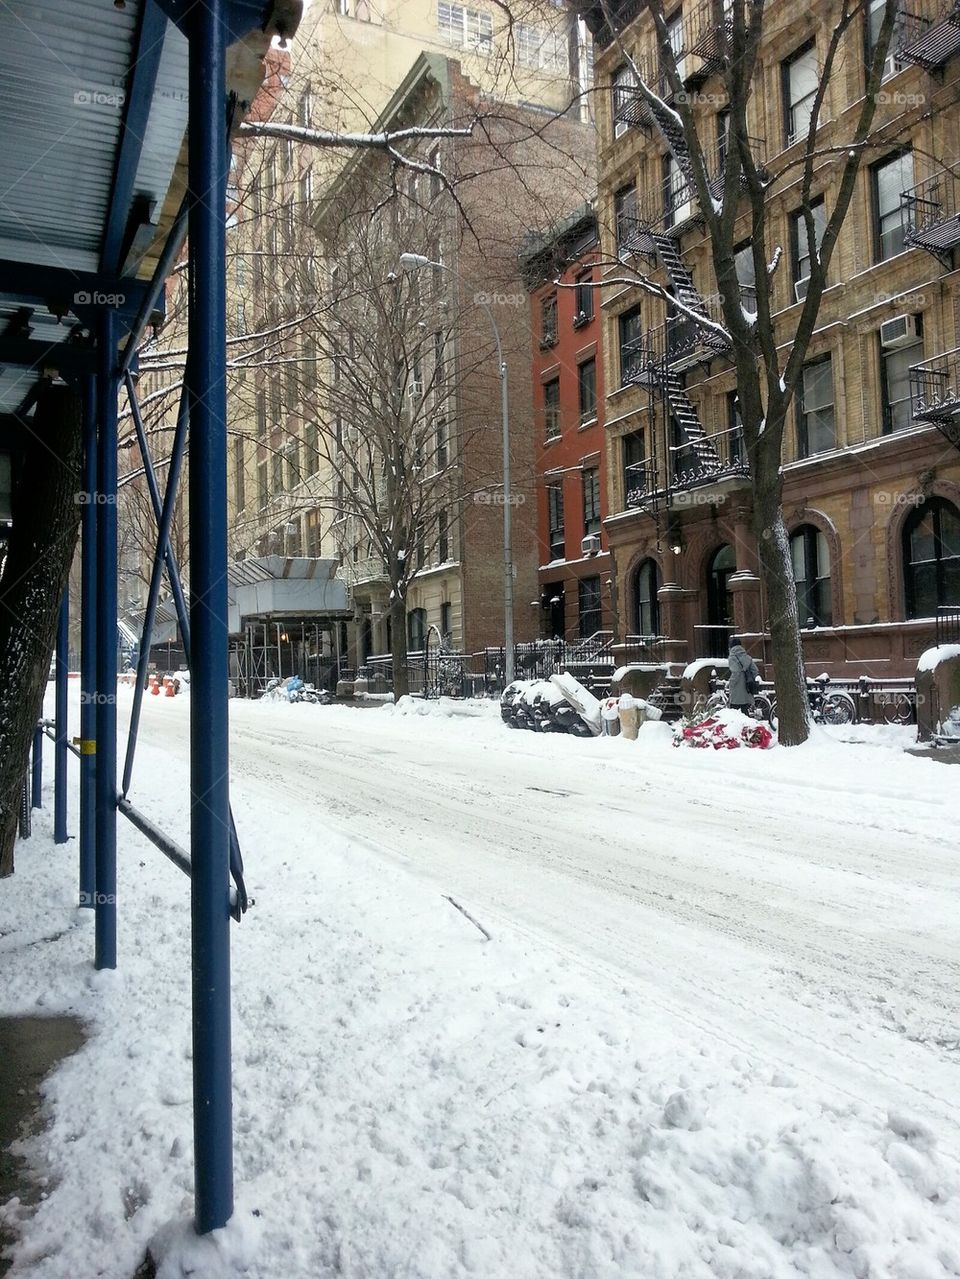 NYC winter scene